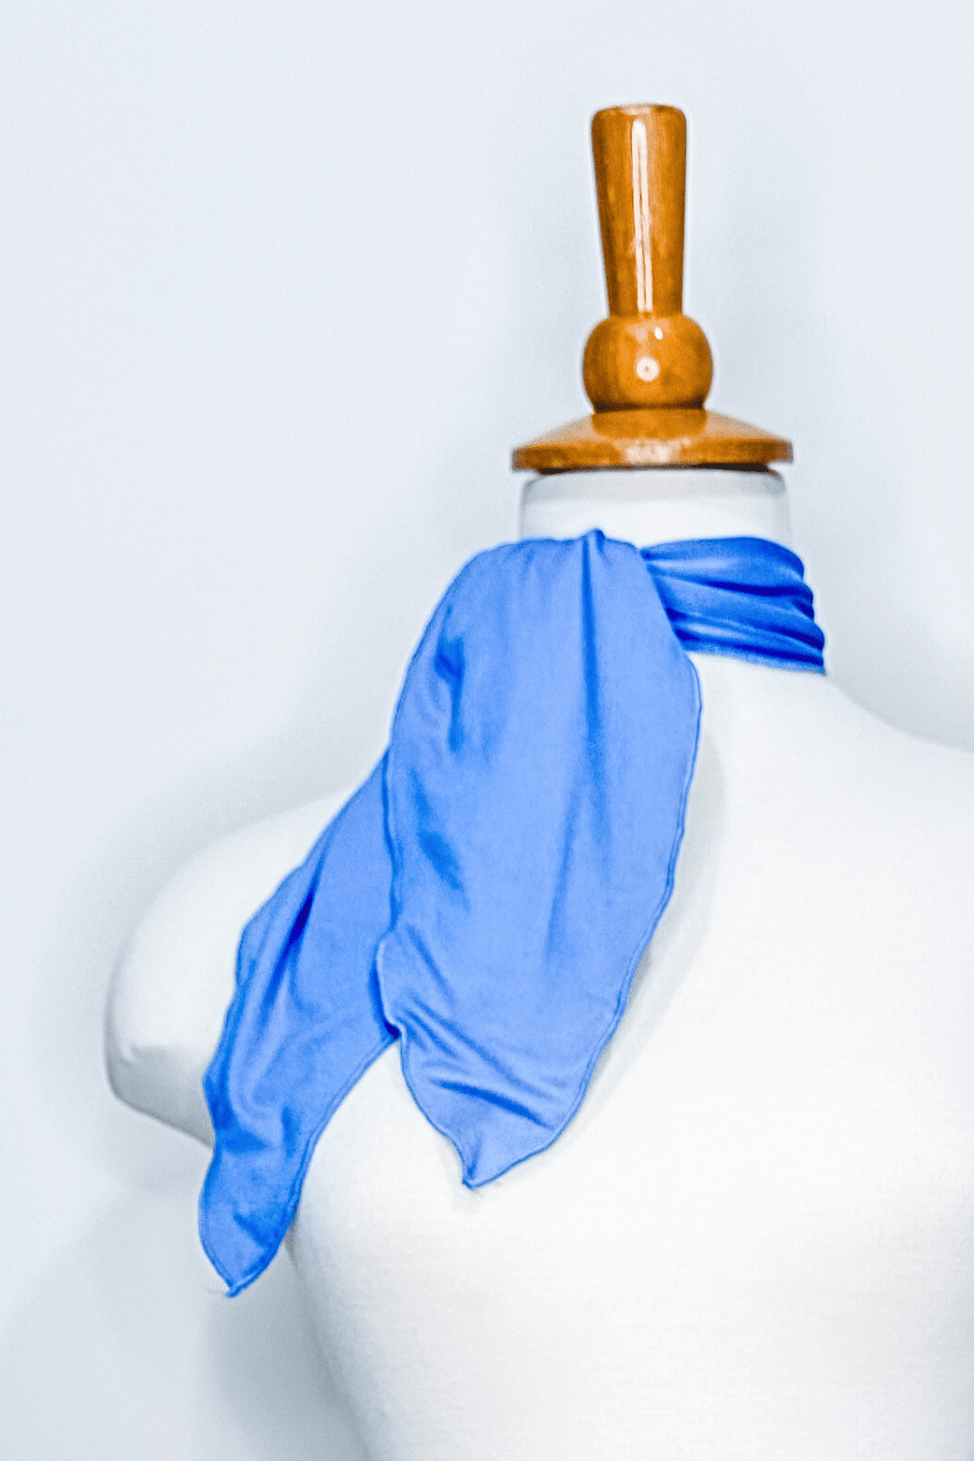 Multiway Tie in Sky Blue color from Diane Kroe